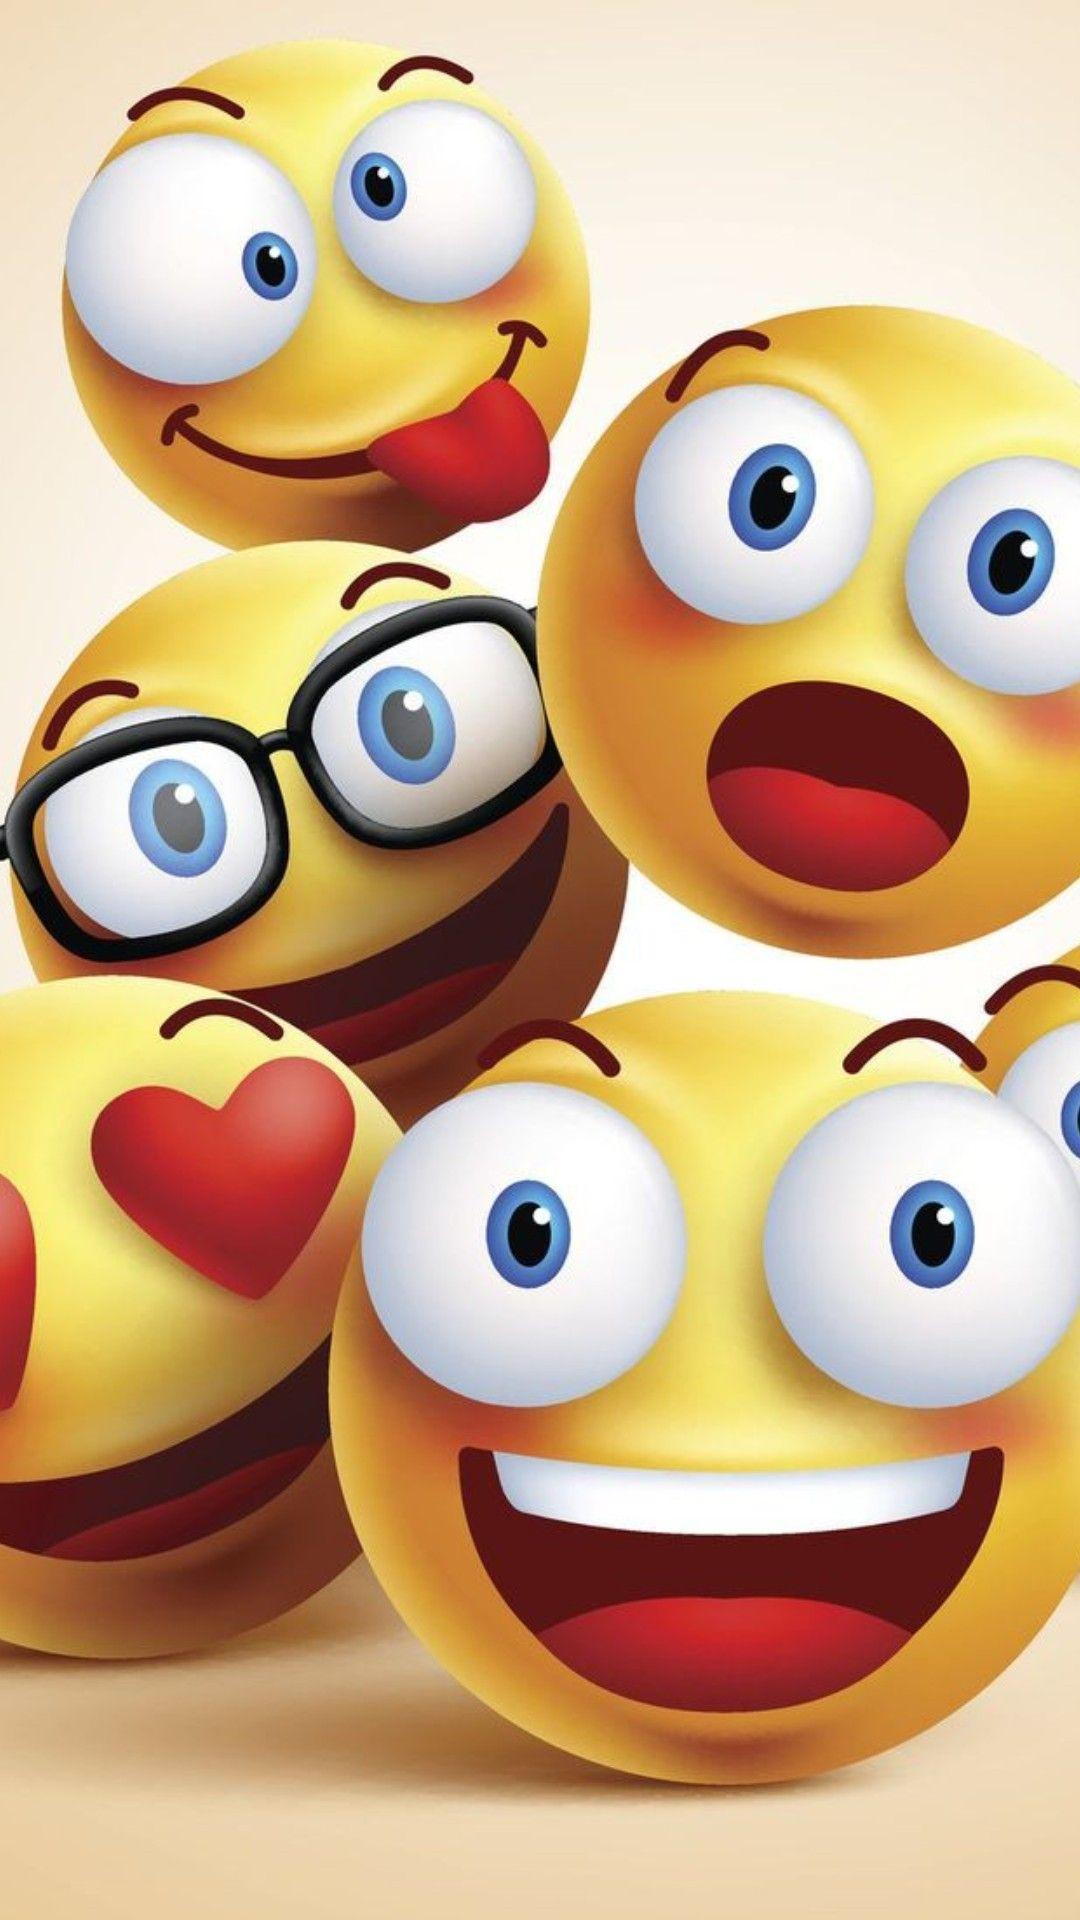 Funny Emoji Wallpapers - Wallpaper Cave